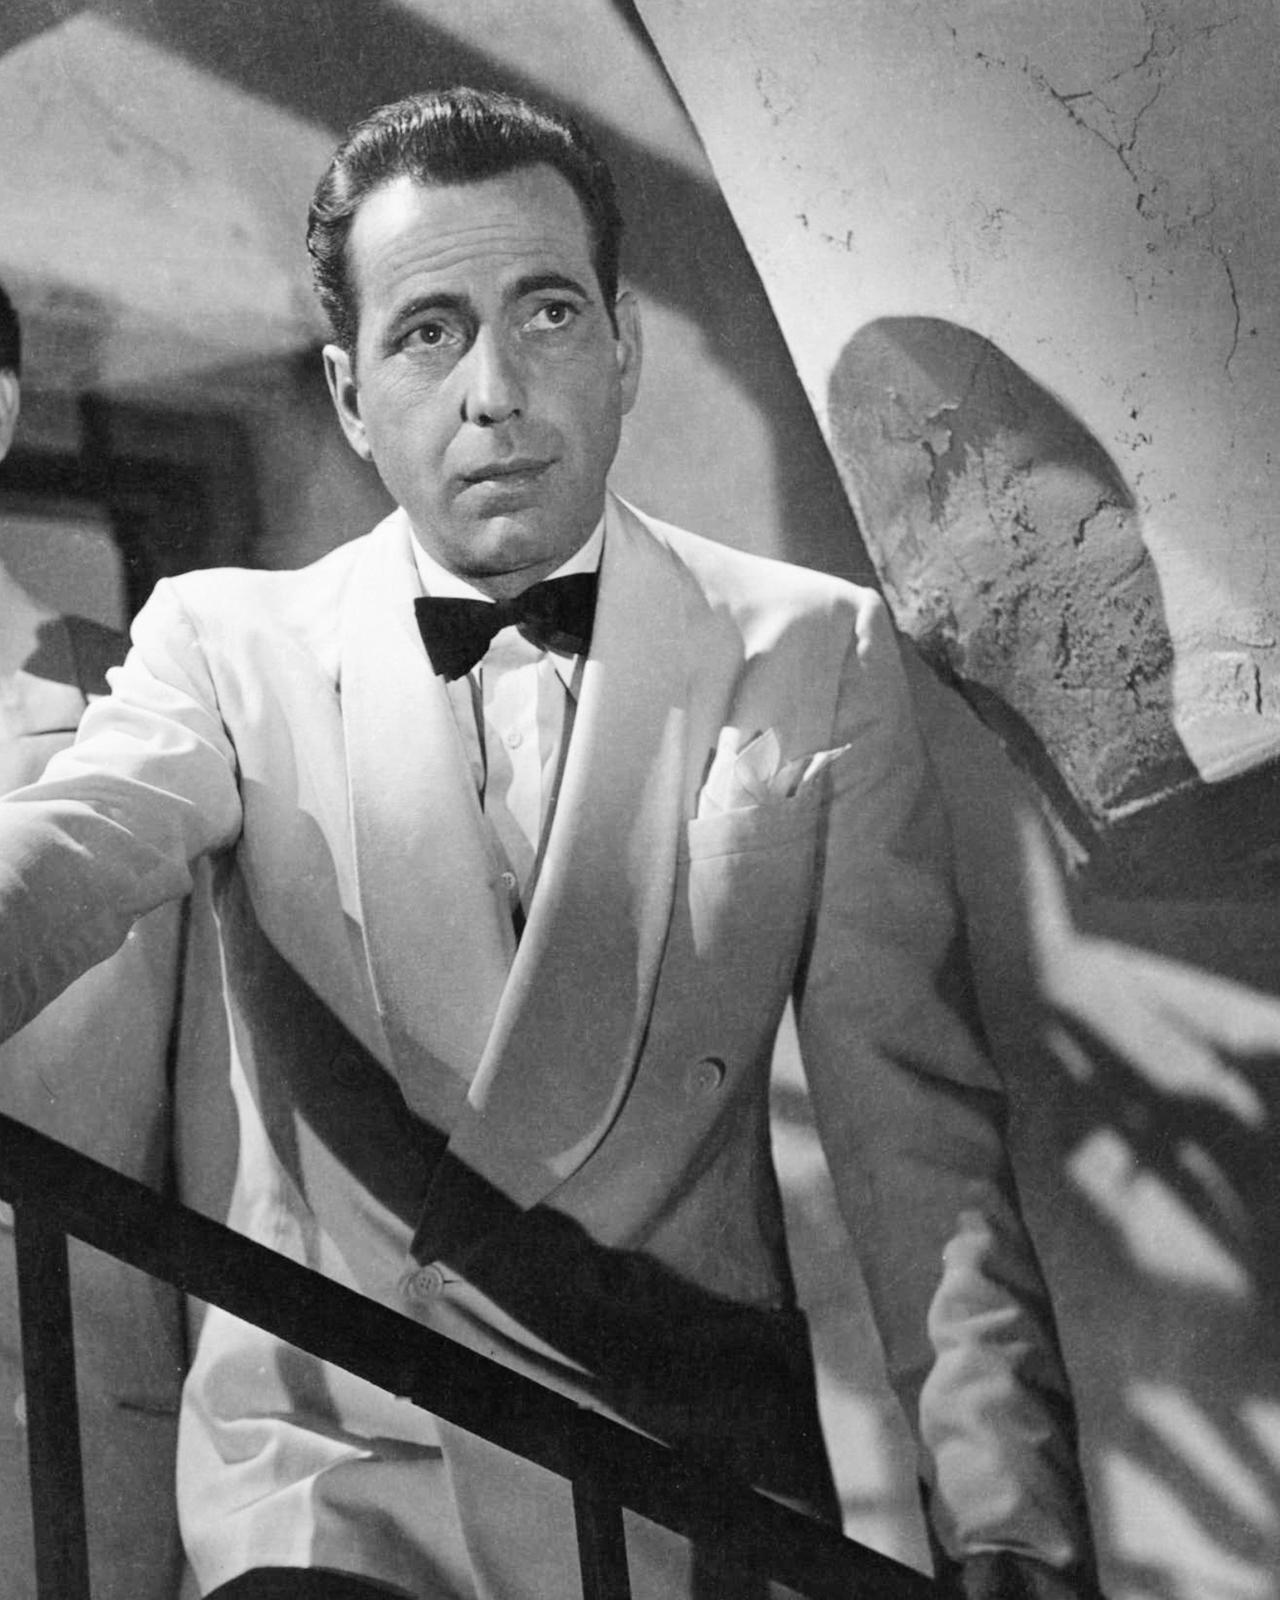 Black & White photo of Casablanca